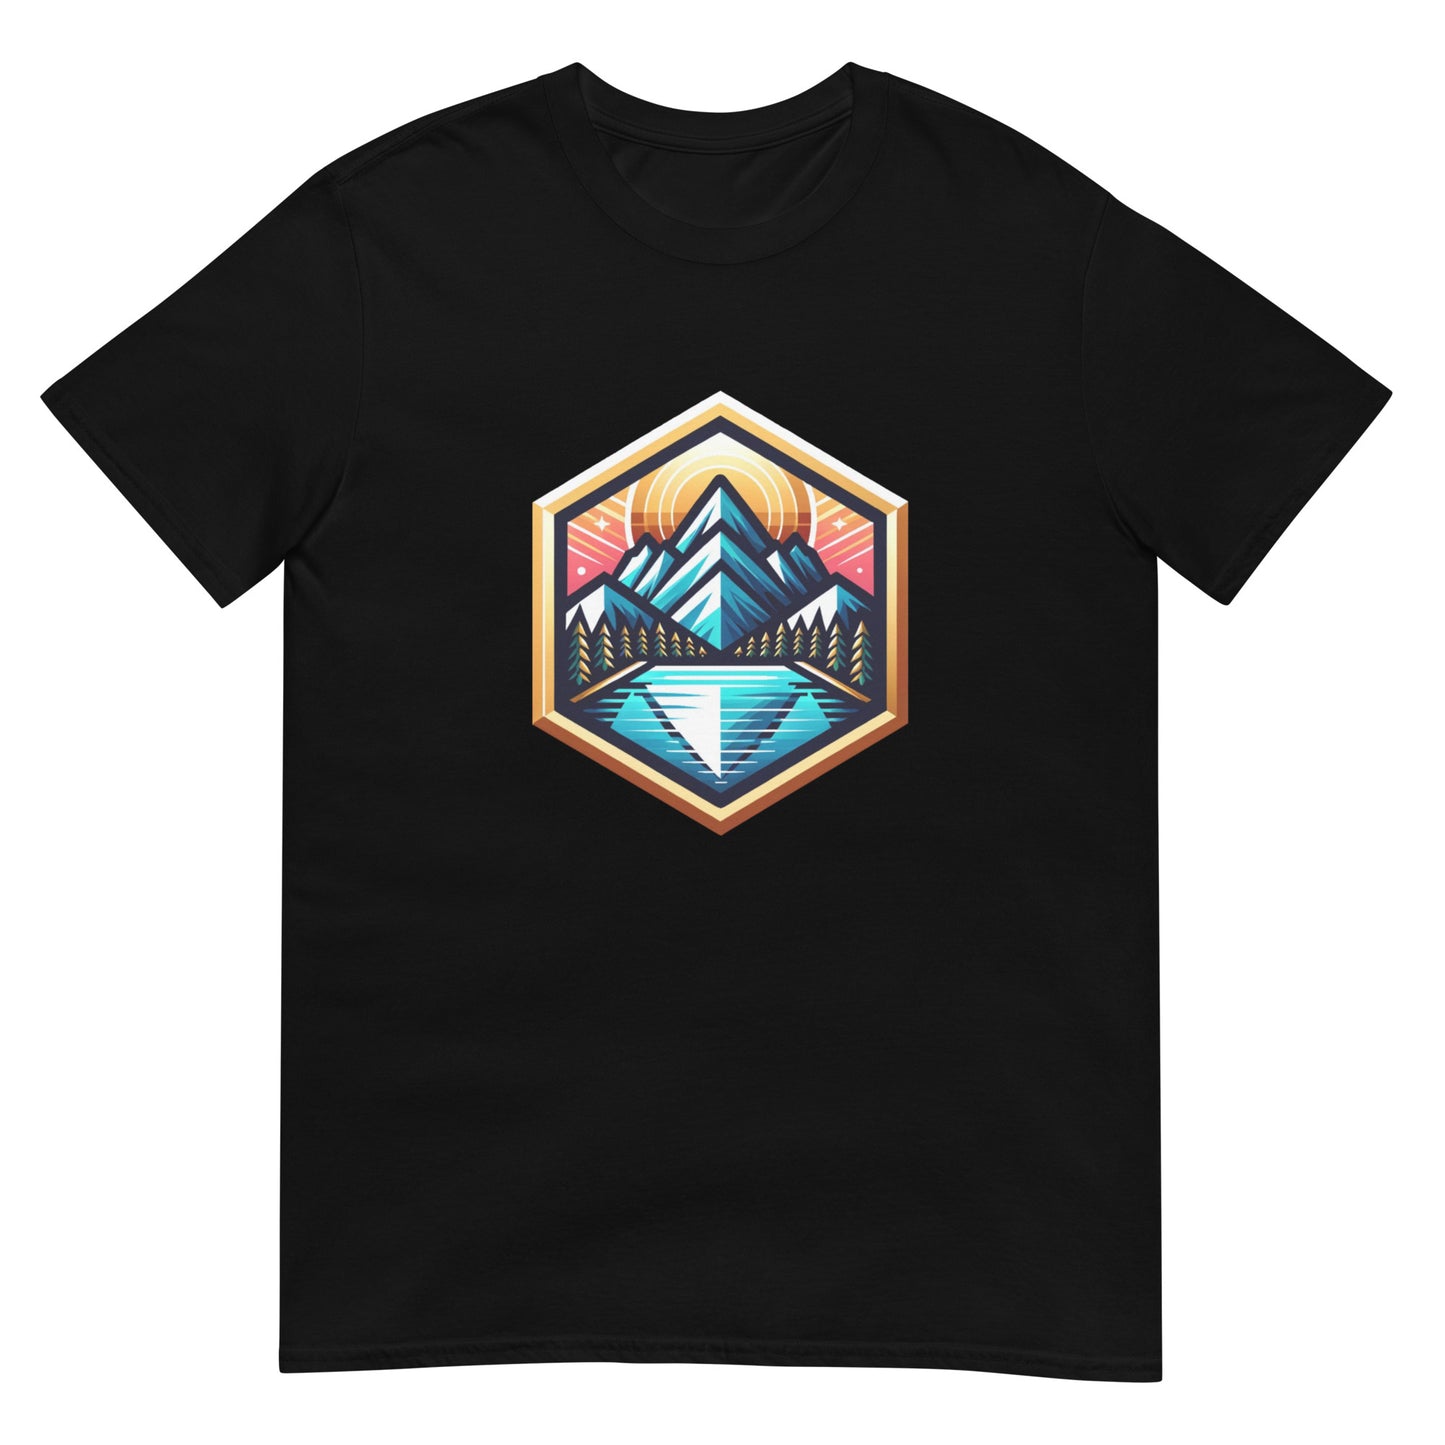 Mountain Short-Sleeve Unisex T-Shirt